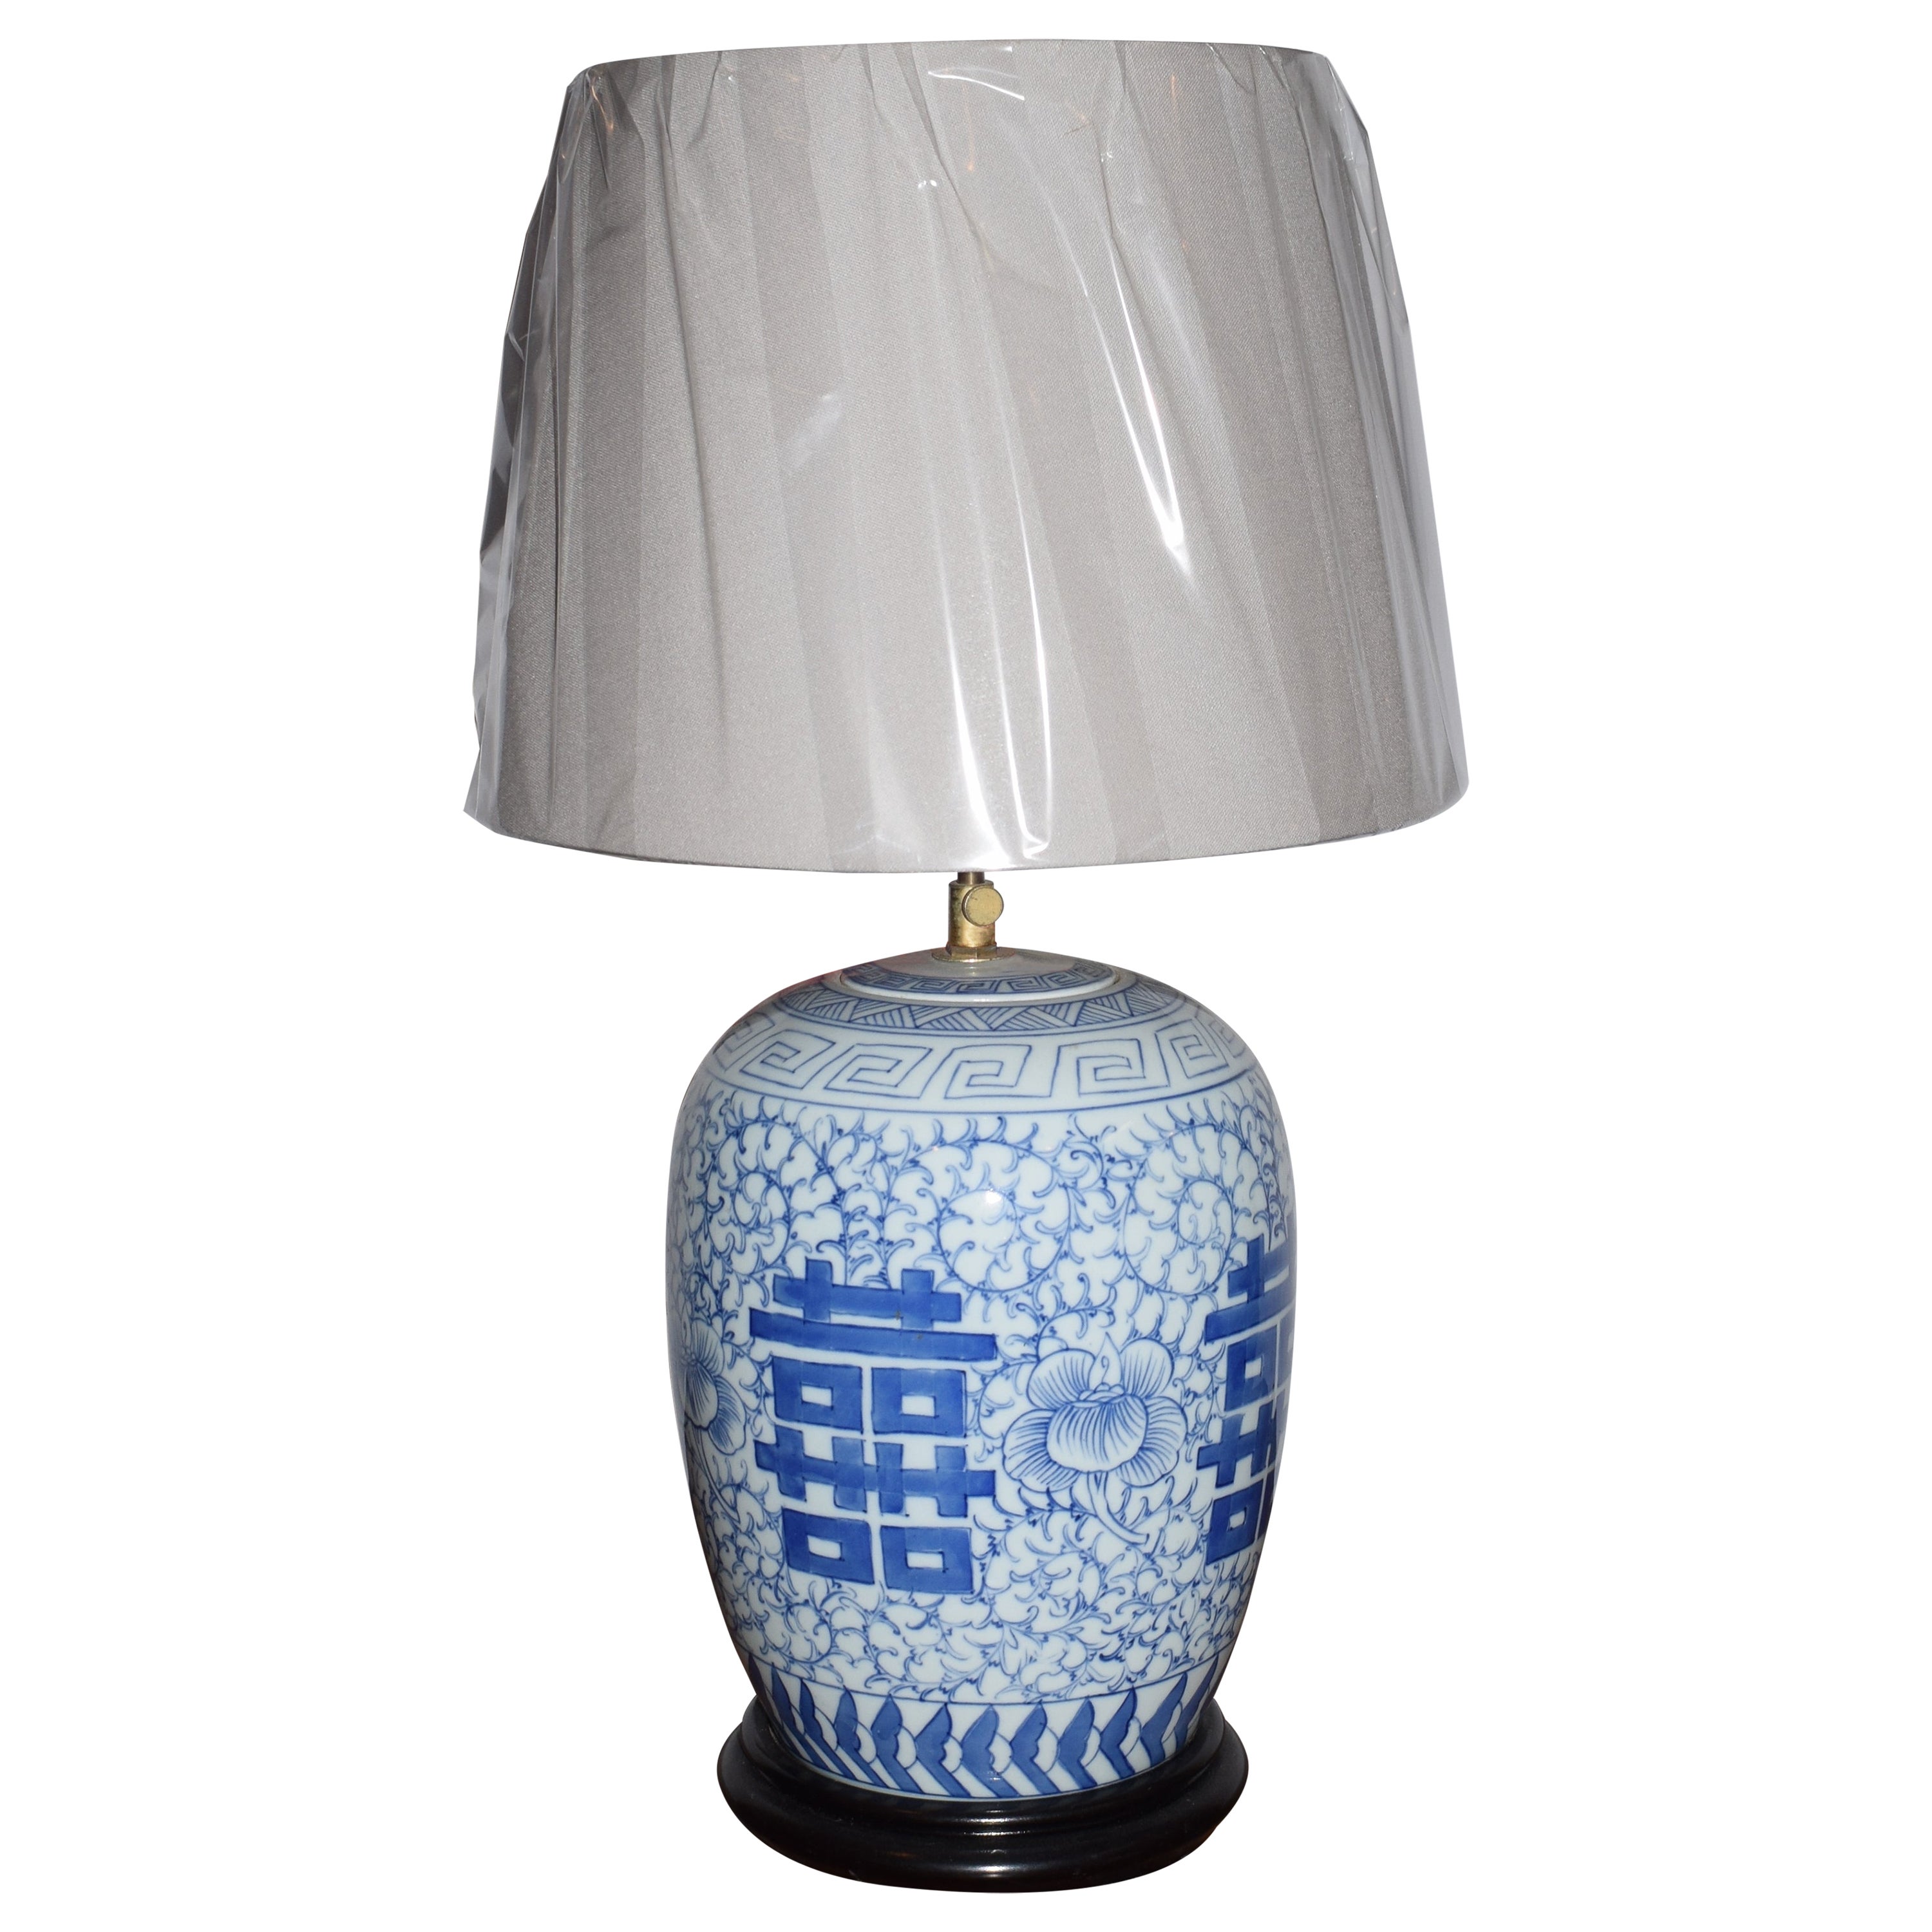 Vintage Blue and White Ceramic Ginger Jar Lamp